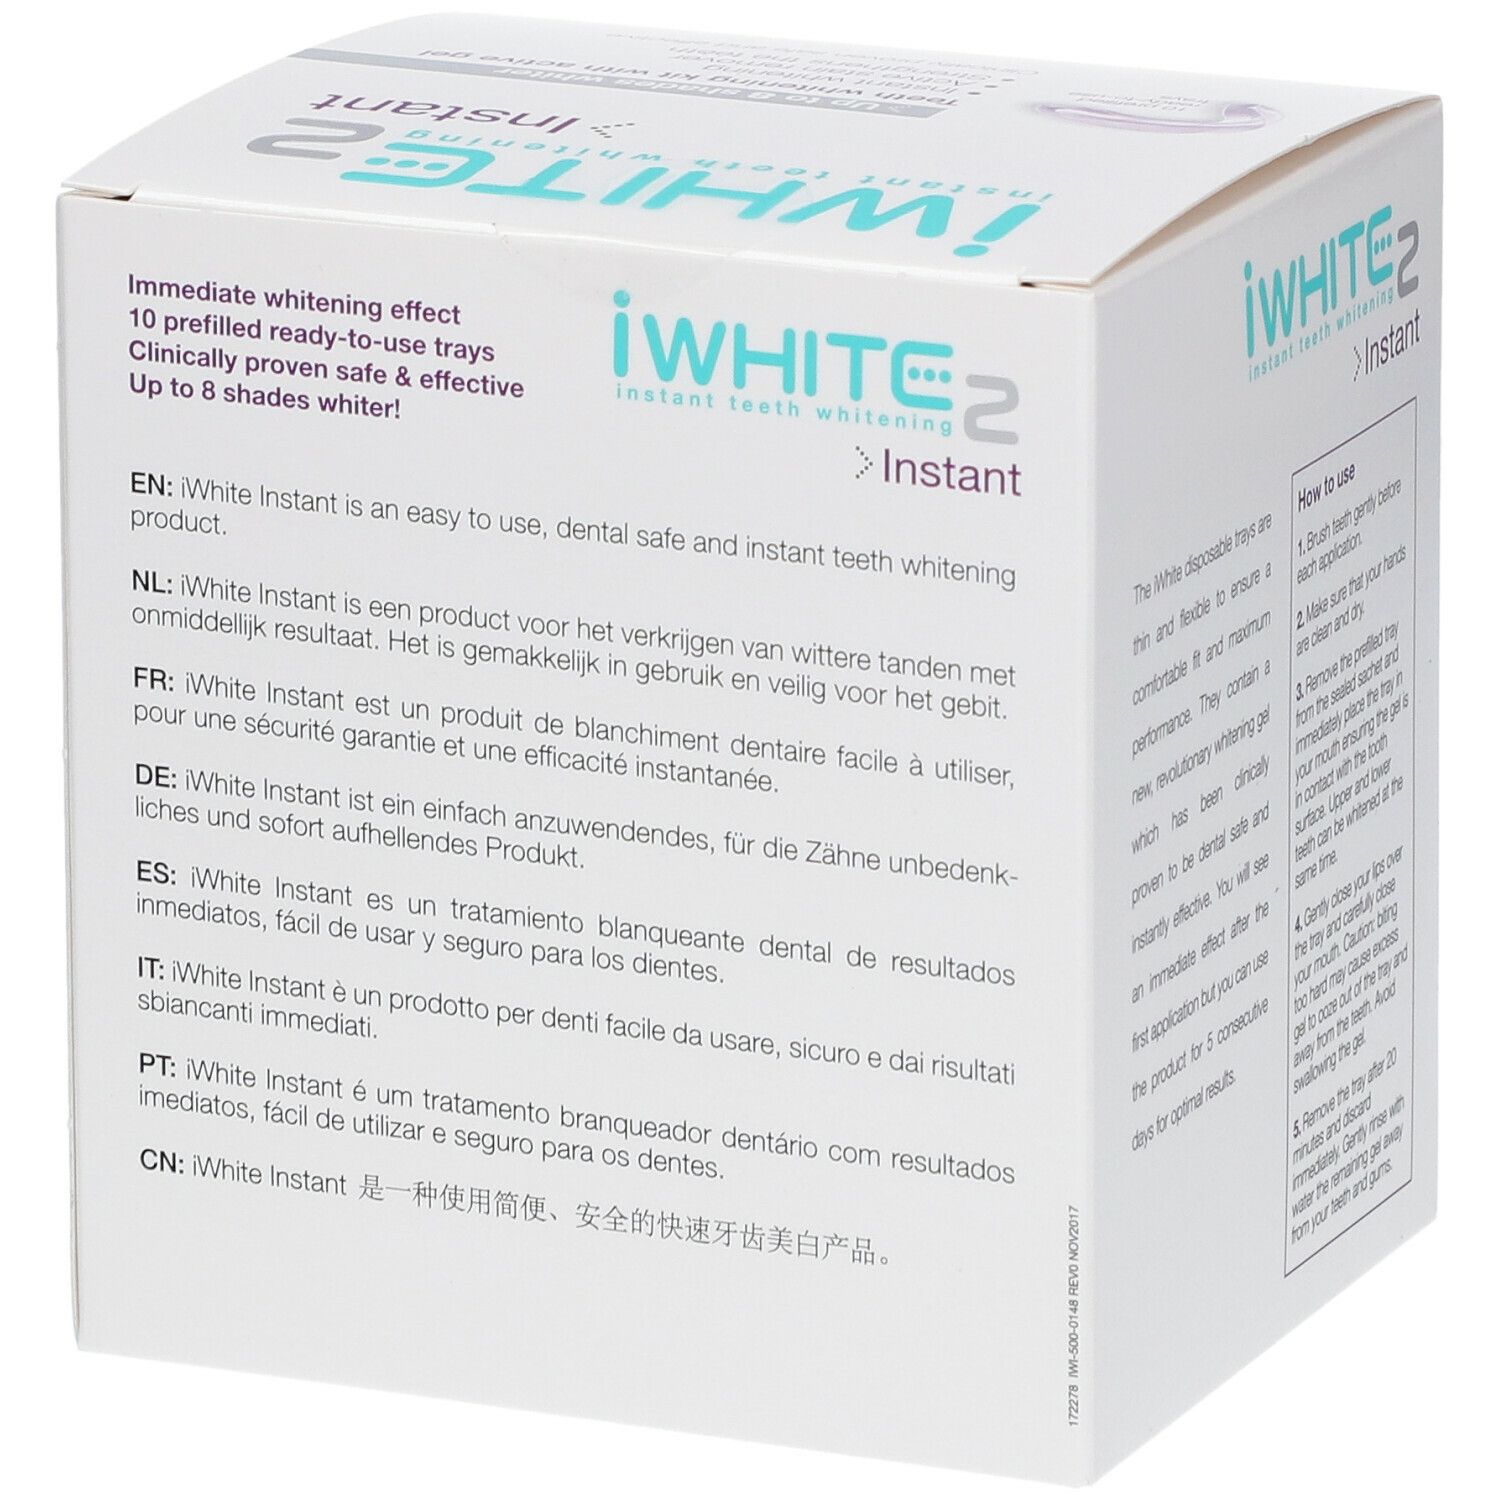 iWhite Instant 2 Whitening Kit